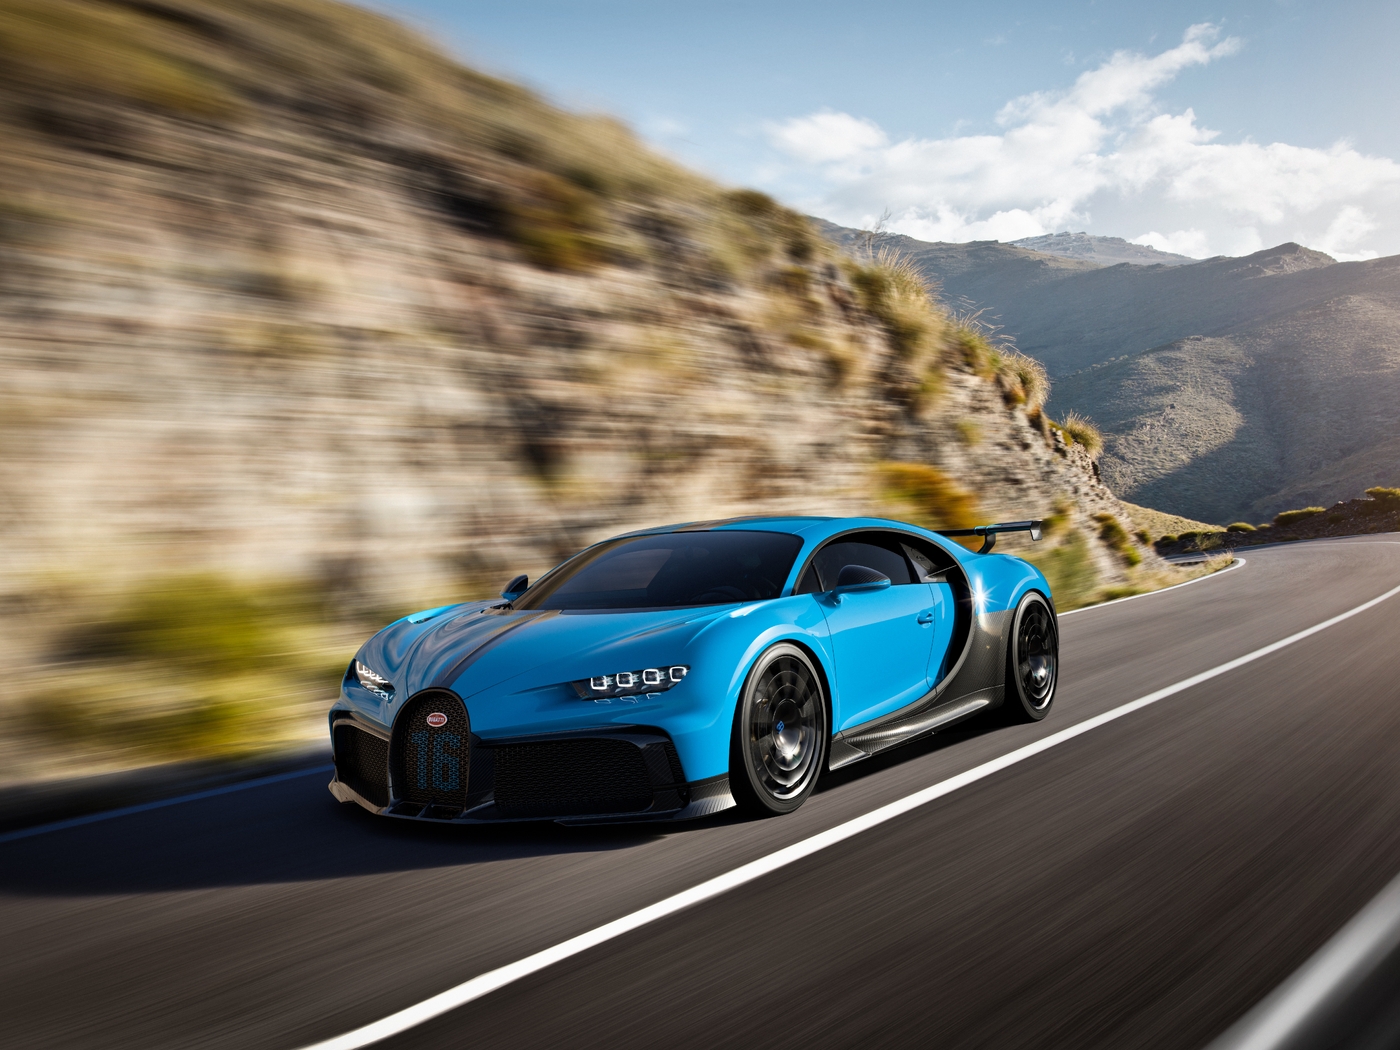 Image: Bugatti, Chiron Pur Sport, speed, road, mountains, blur